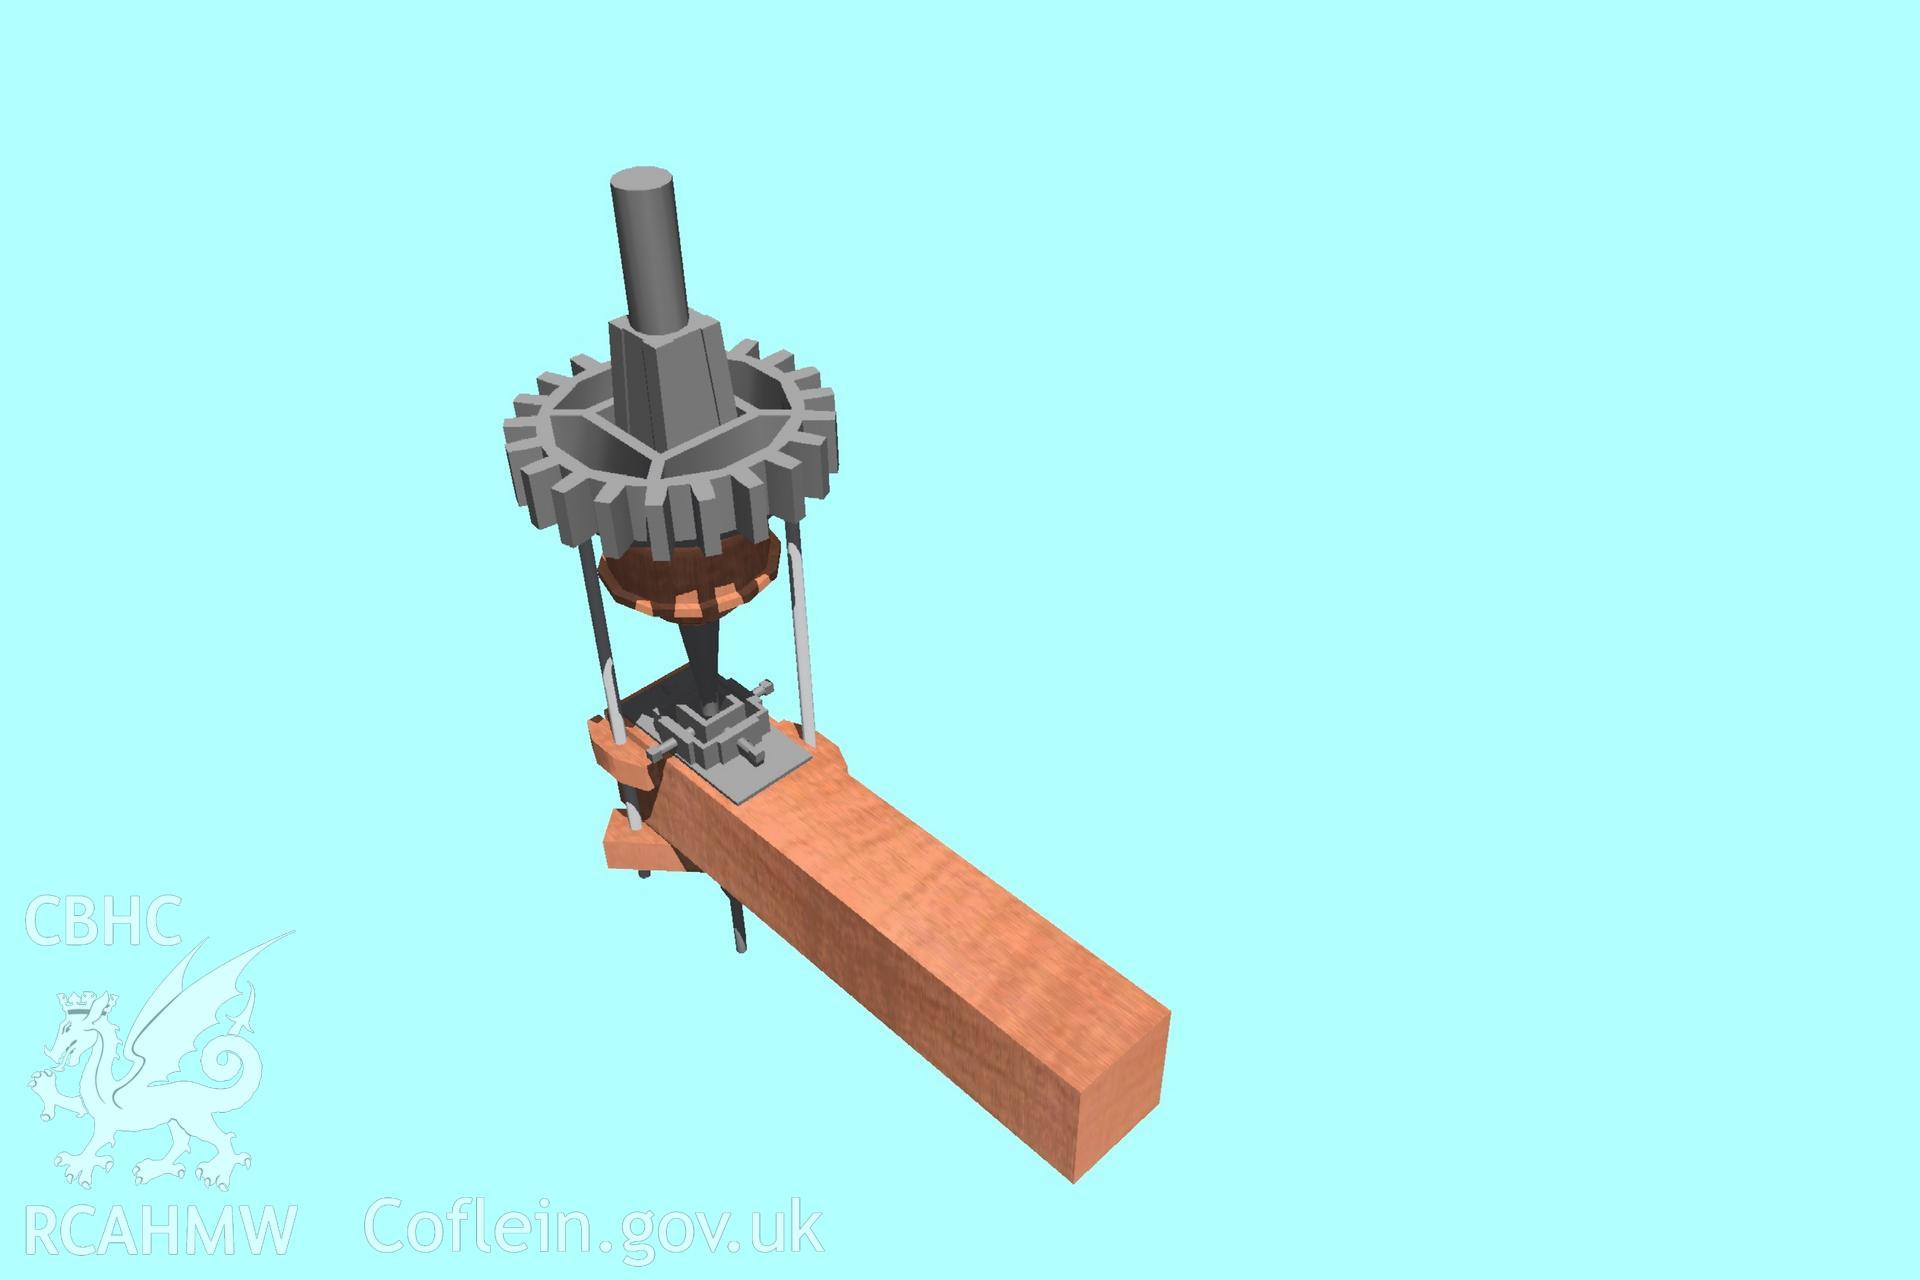 Digital 3D drawing relating to Blaenpennal mill.